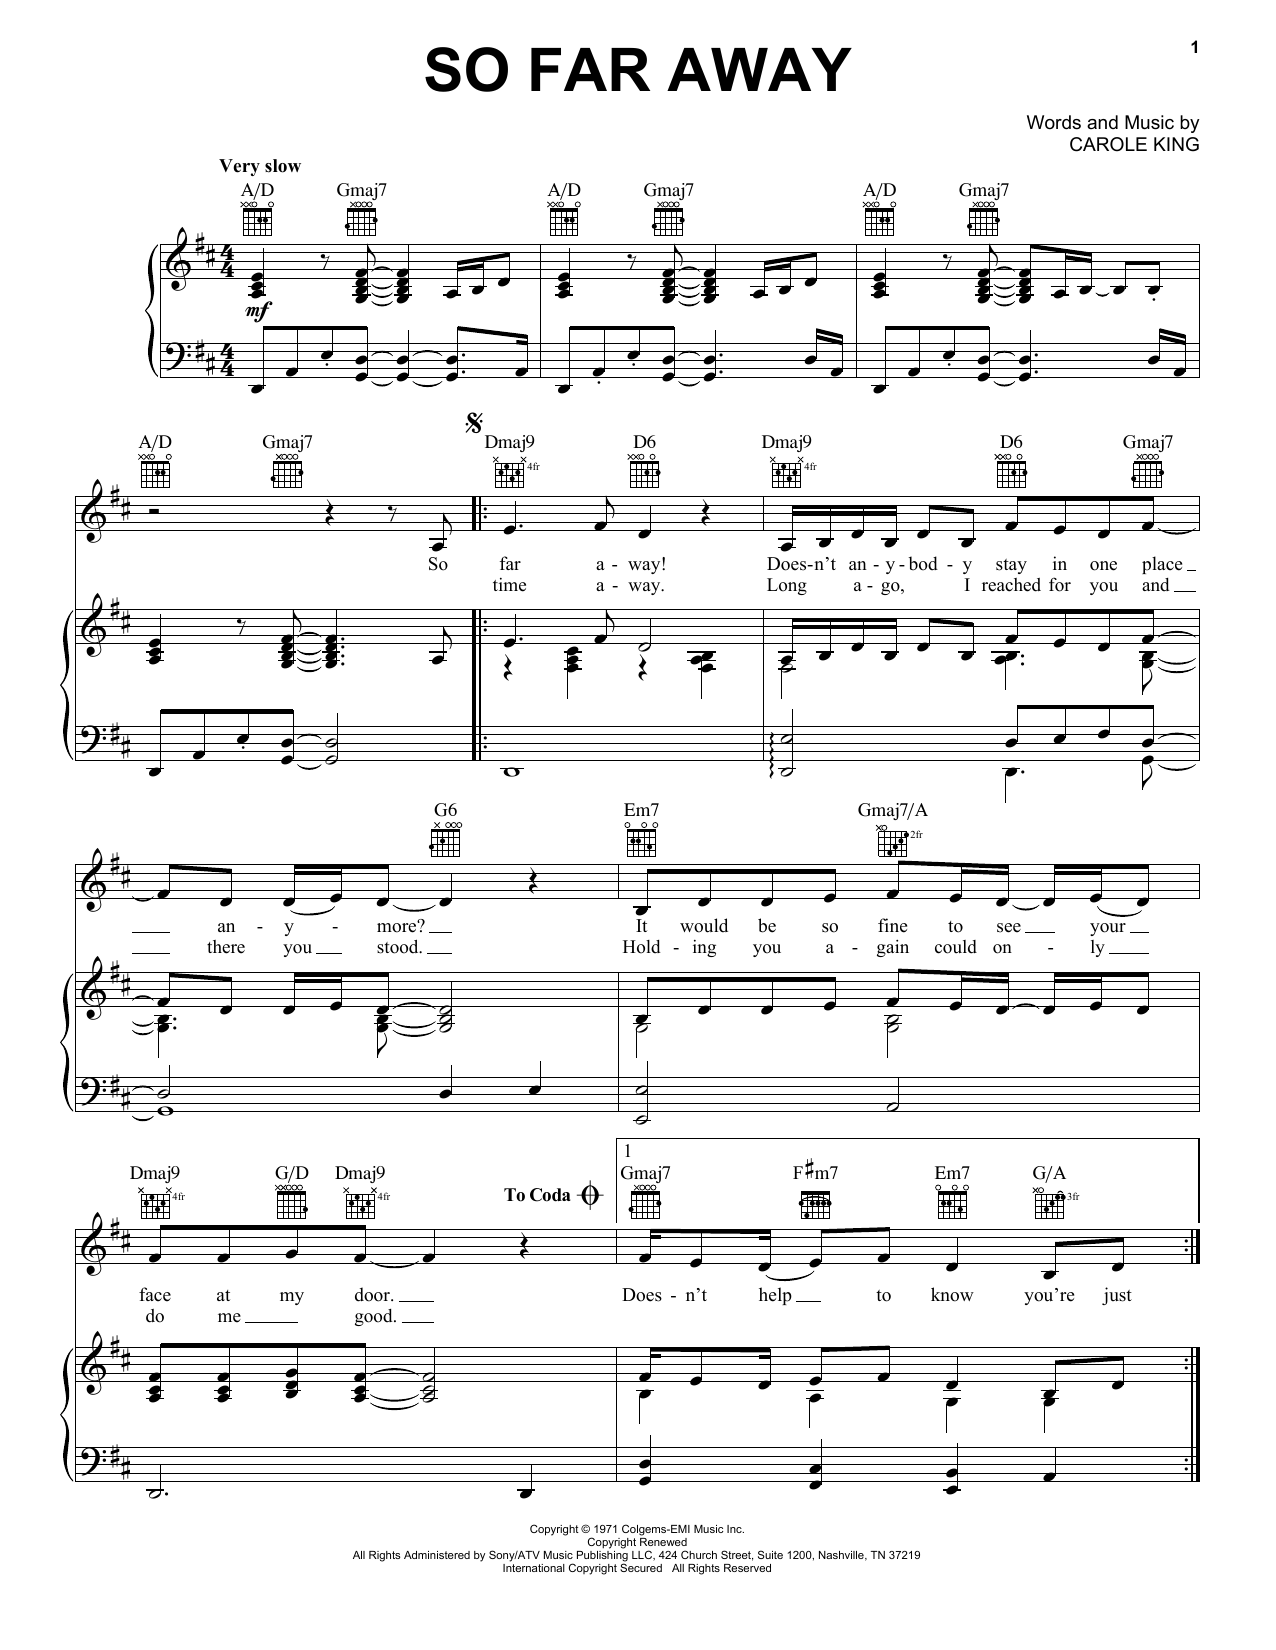 Carole King So Far Away Sheet Music Notes & Chords for Real Book – Melody, Lyrics & Chords - Download or Print PDF